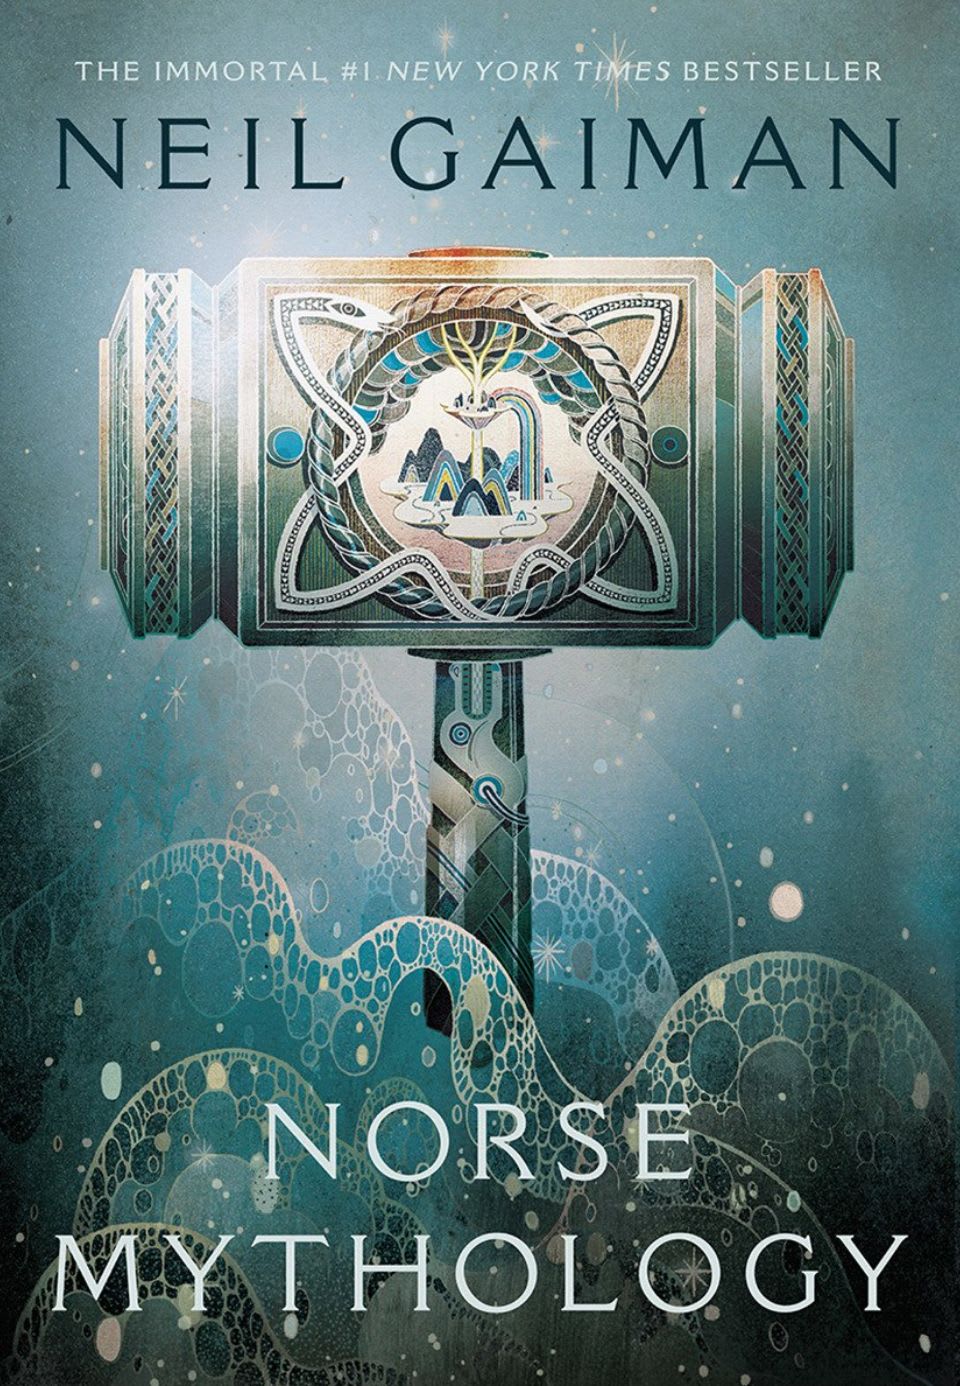 Discover W.W. Norton & Company's 'Norse Mythology' by Neil Gaiman on Amazon.